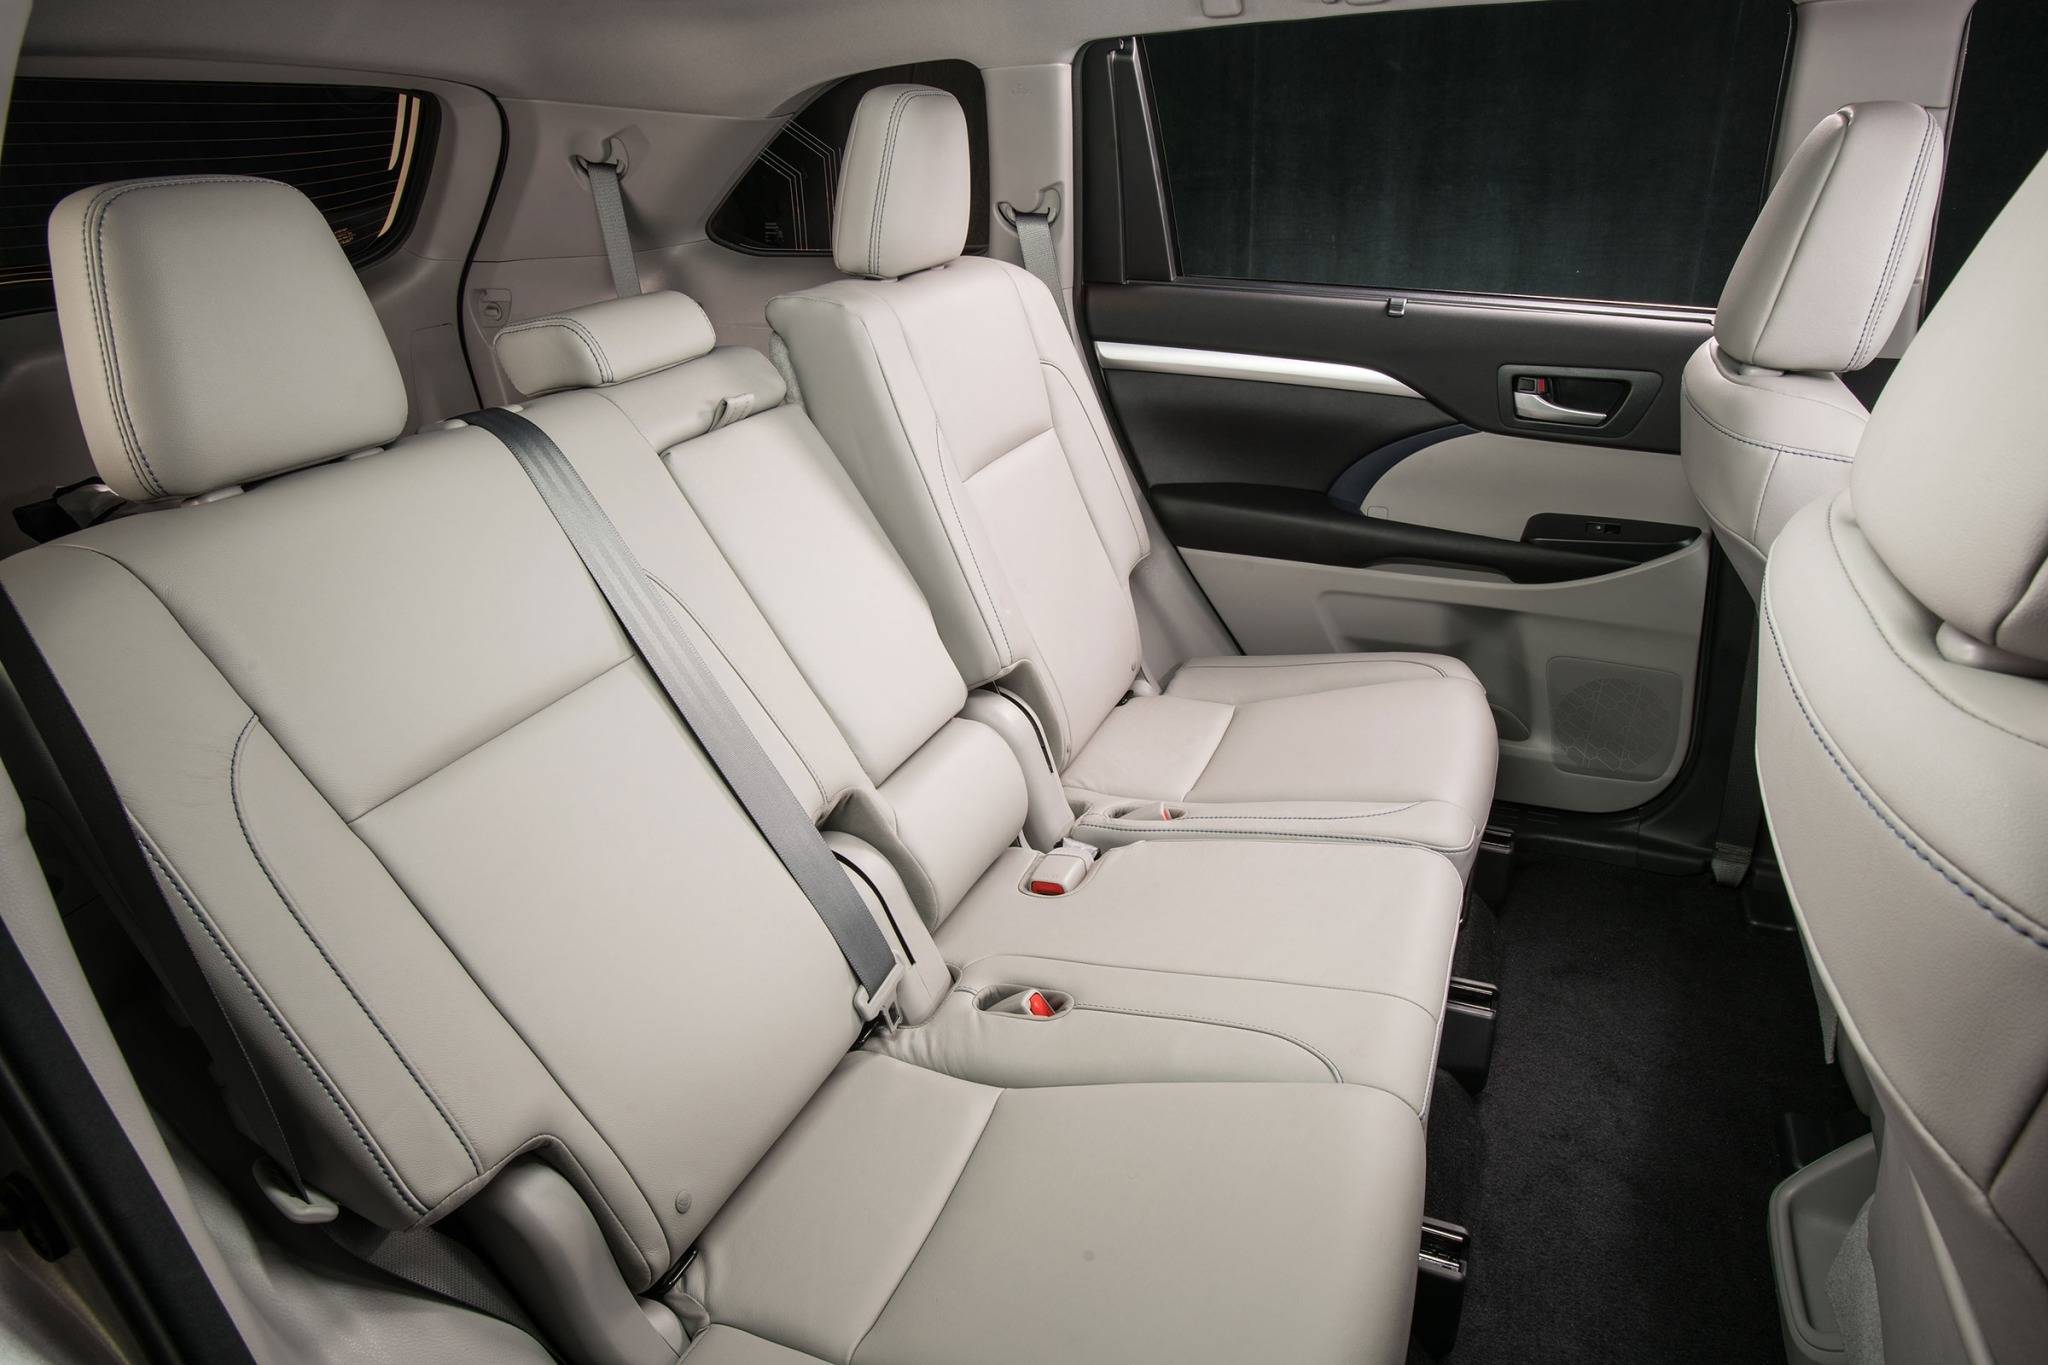 Toyota Highlander Interior Space